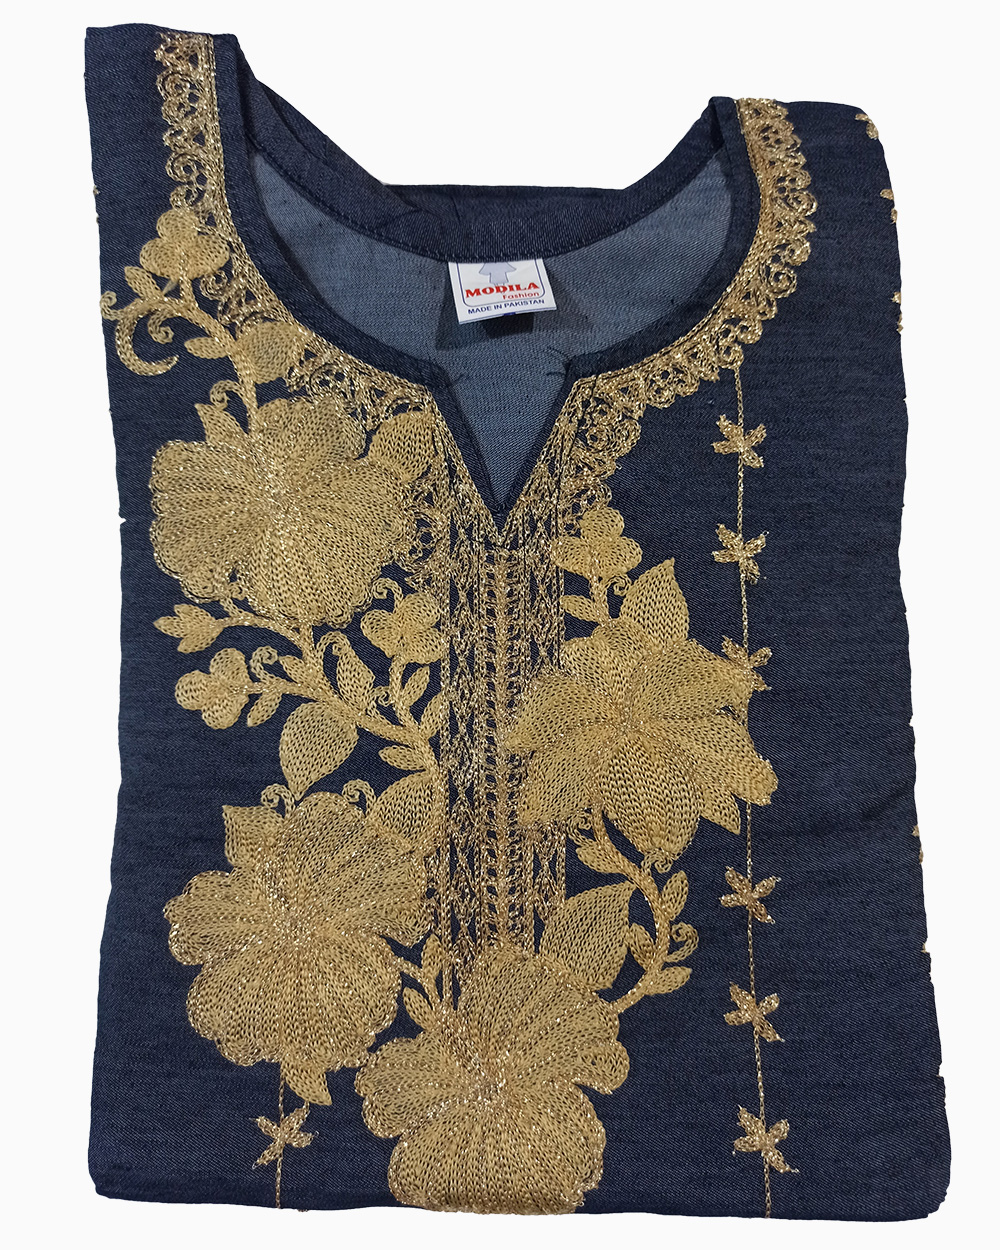 heavy Denim-ark embroidery-tilla work- patch frock-ghagra design-female denim designs (3)